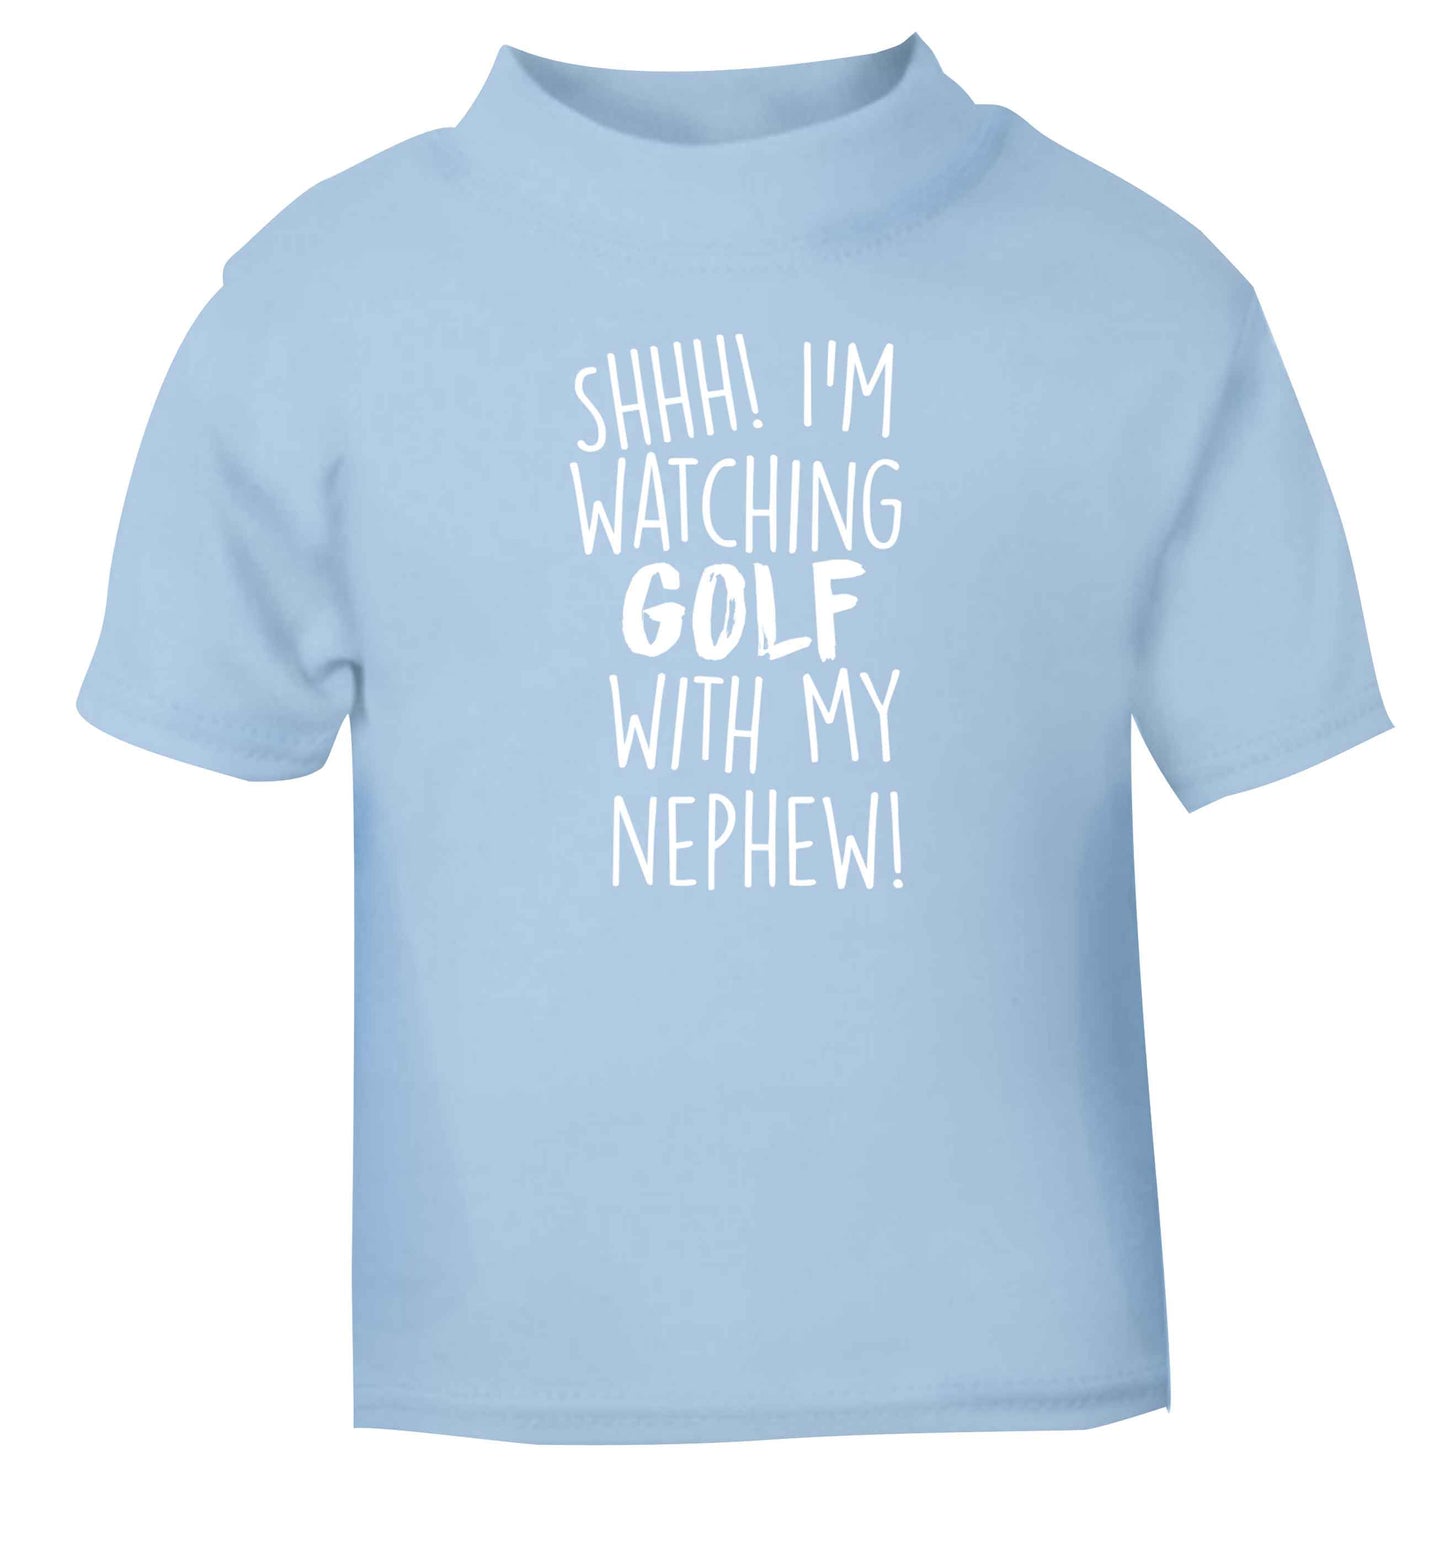 Shh I'm watching golf with my nephew light blue Baby Toddler Tshirt 2 Years